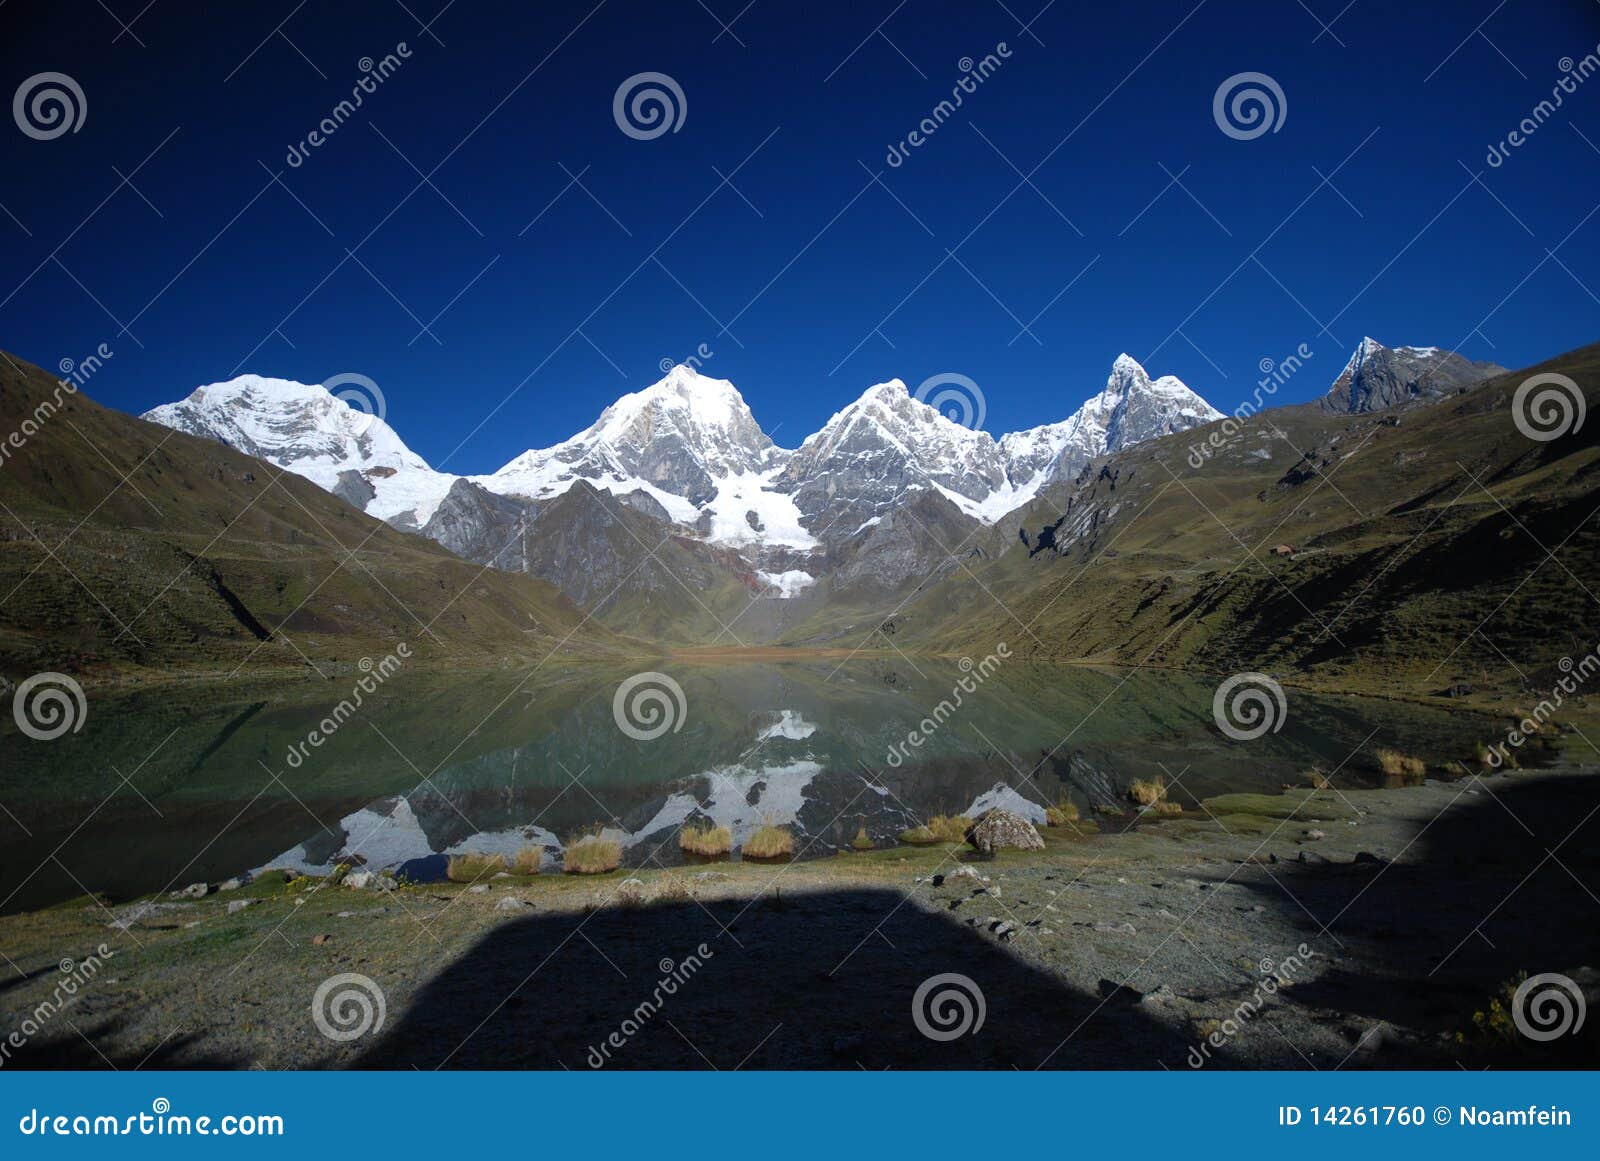 lake and snow peaks of peru